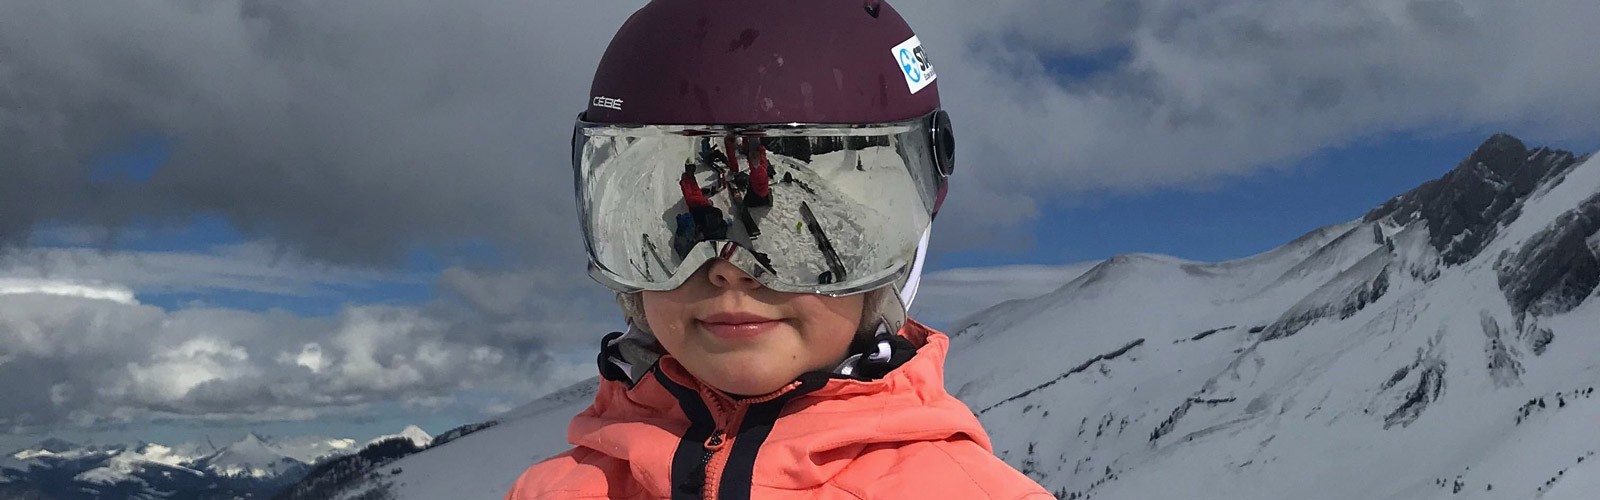 Masques de ski enfant